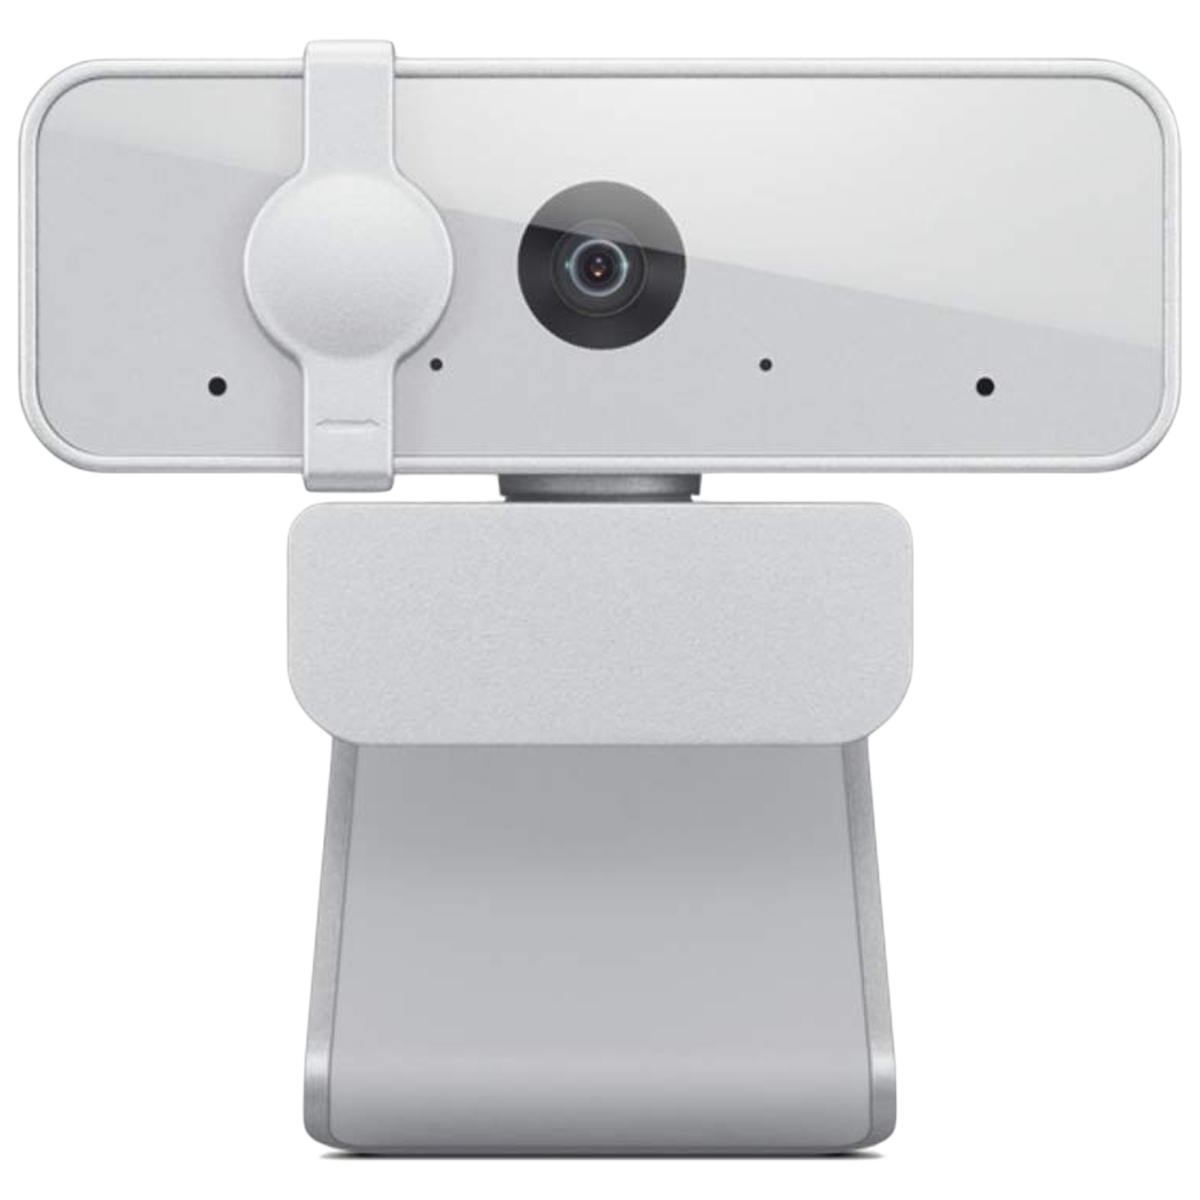 lenovo - lenovo 300 USB 2.1 MP Web Cam (Full HD Video Call, GXC1B34793, Cloud Grey)